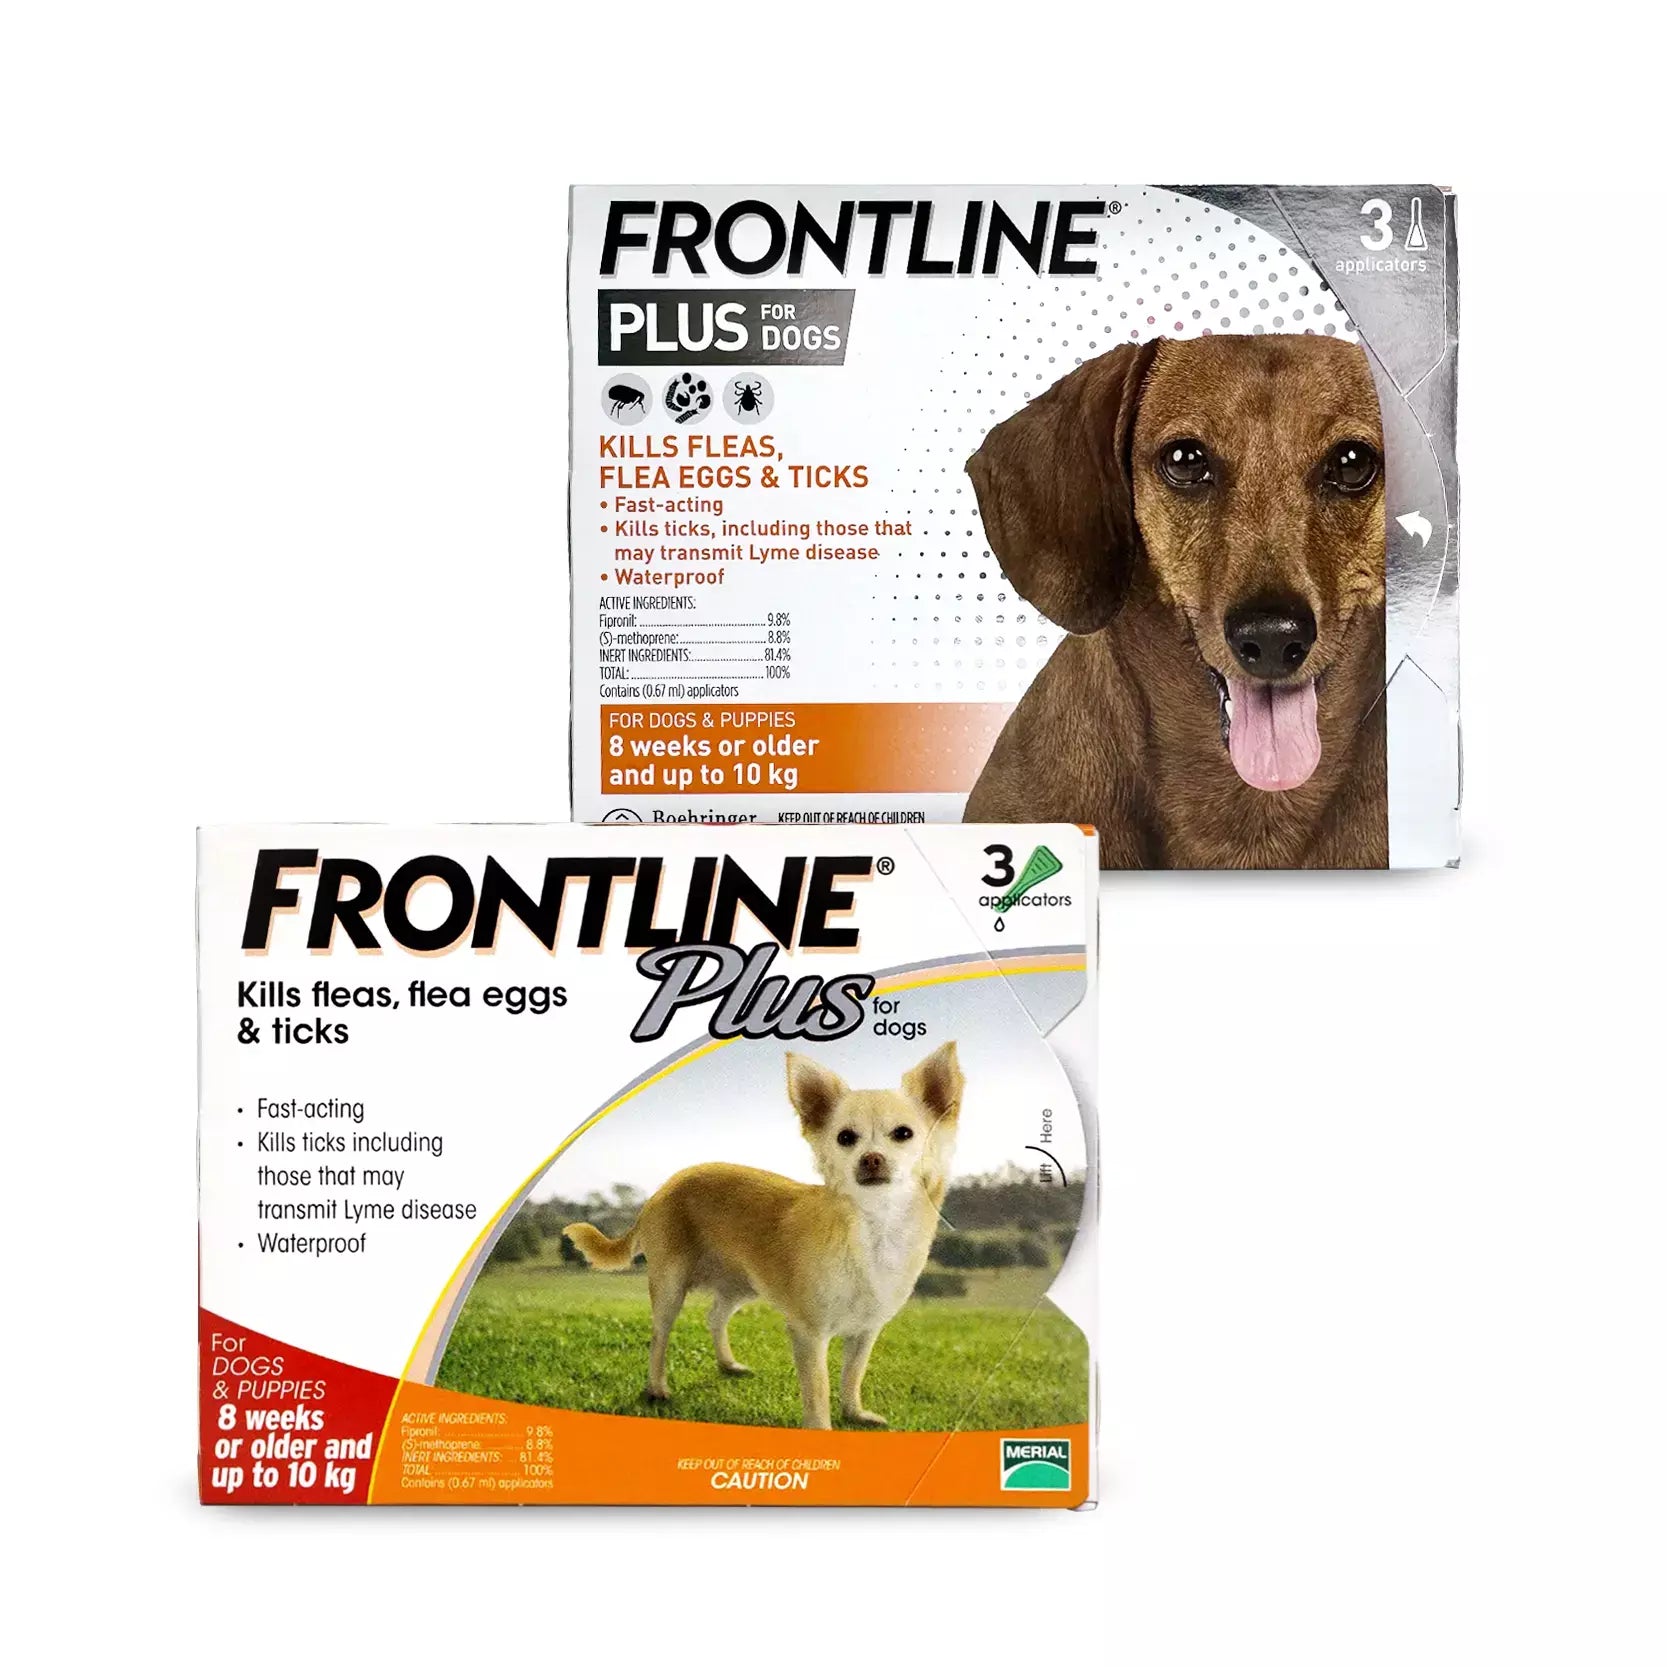 Frontline Top Spot VS Frontline Plus - CanadaVetExpress - Pet Care Tips